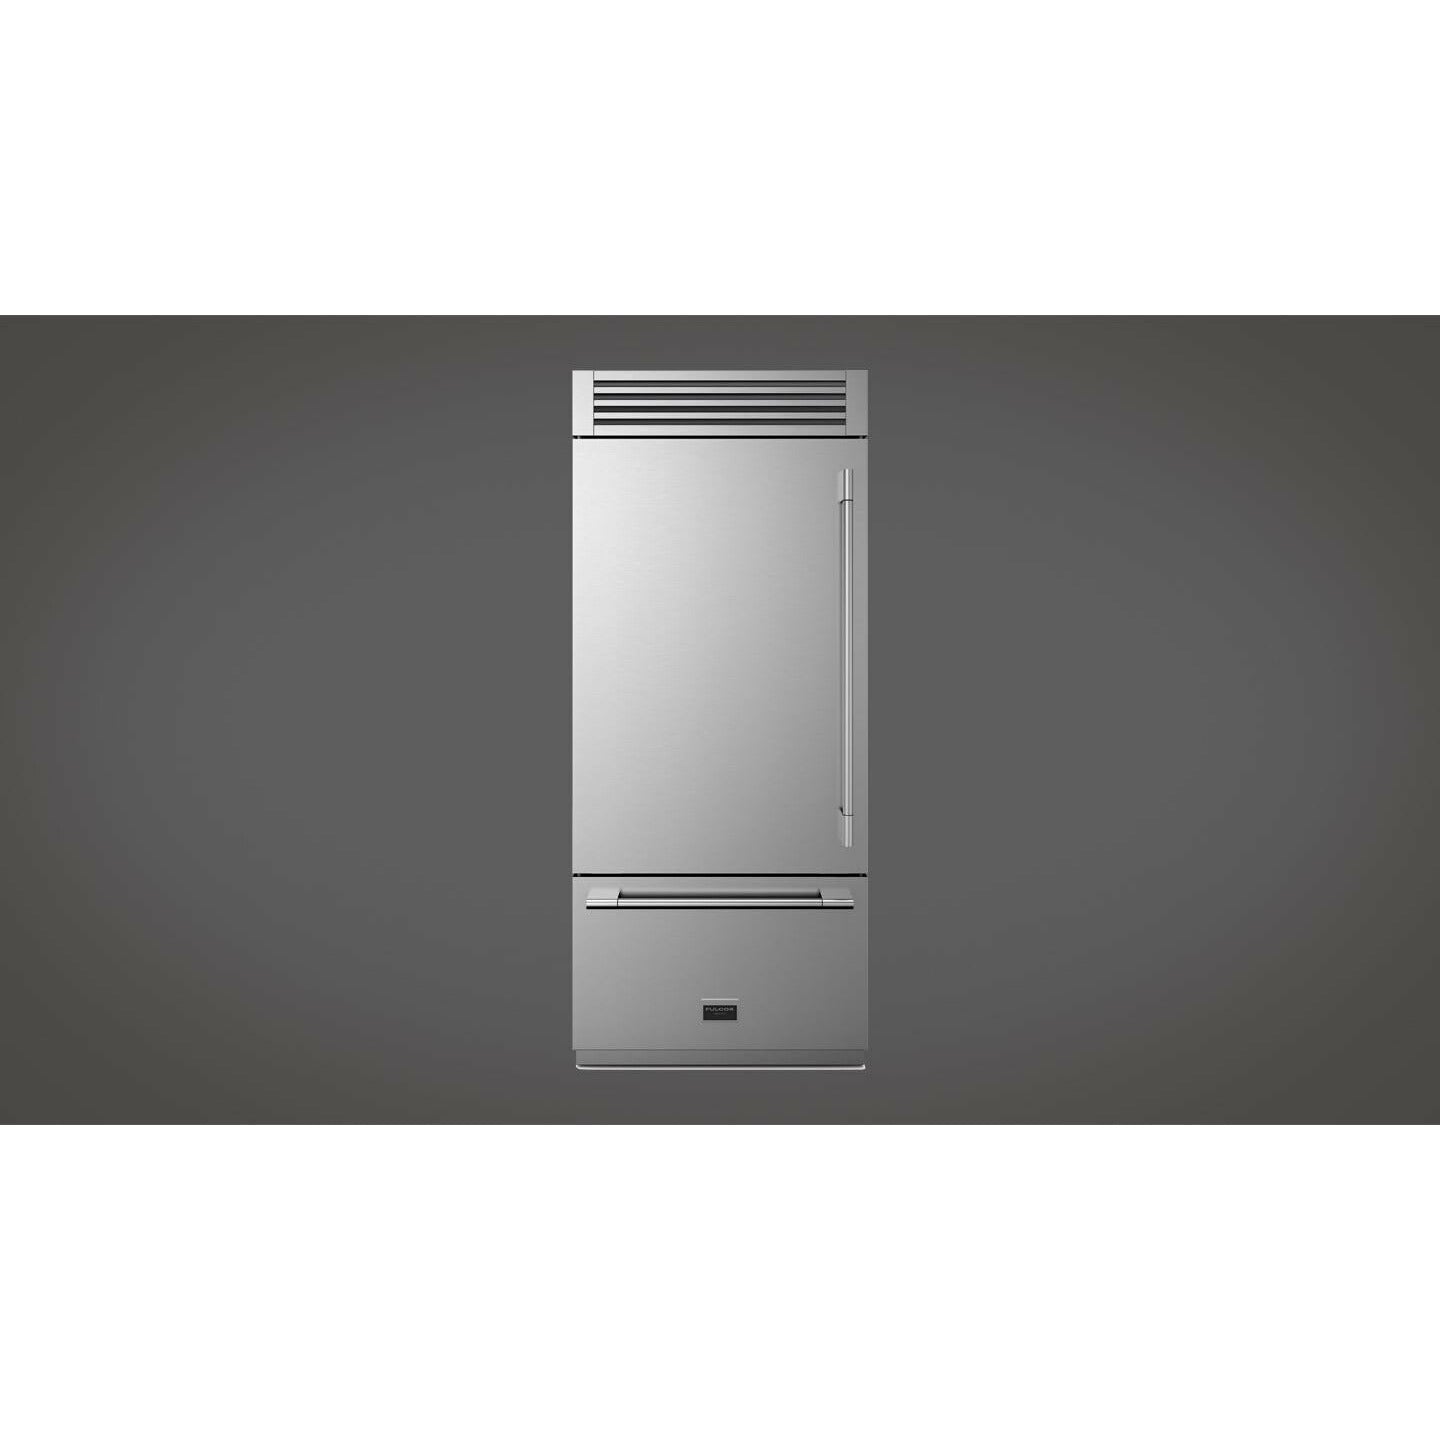 Fulgor Milano 36" Built-In Bottom Mount Refrigerator with 18.5 Cu. Ft. Capacity, Stainless Steel - F7PBM36S1 Refrigerators F7PBM36S1-R Luxury Appliances Direct